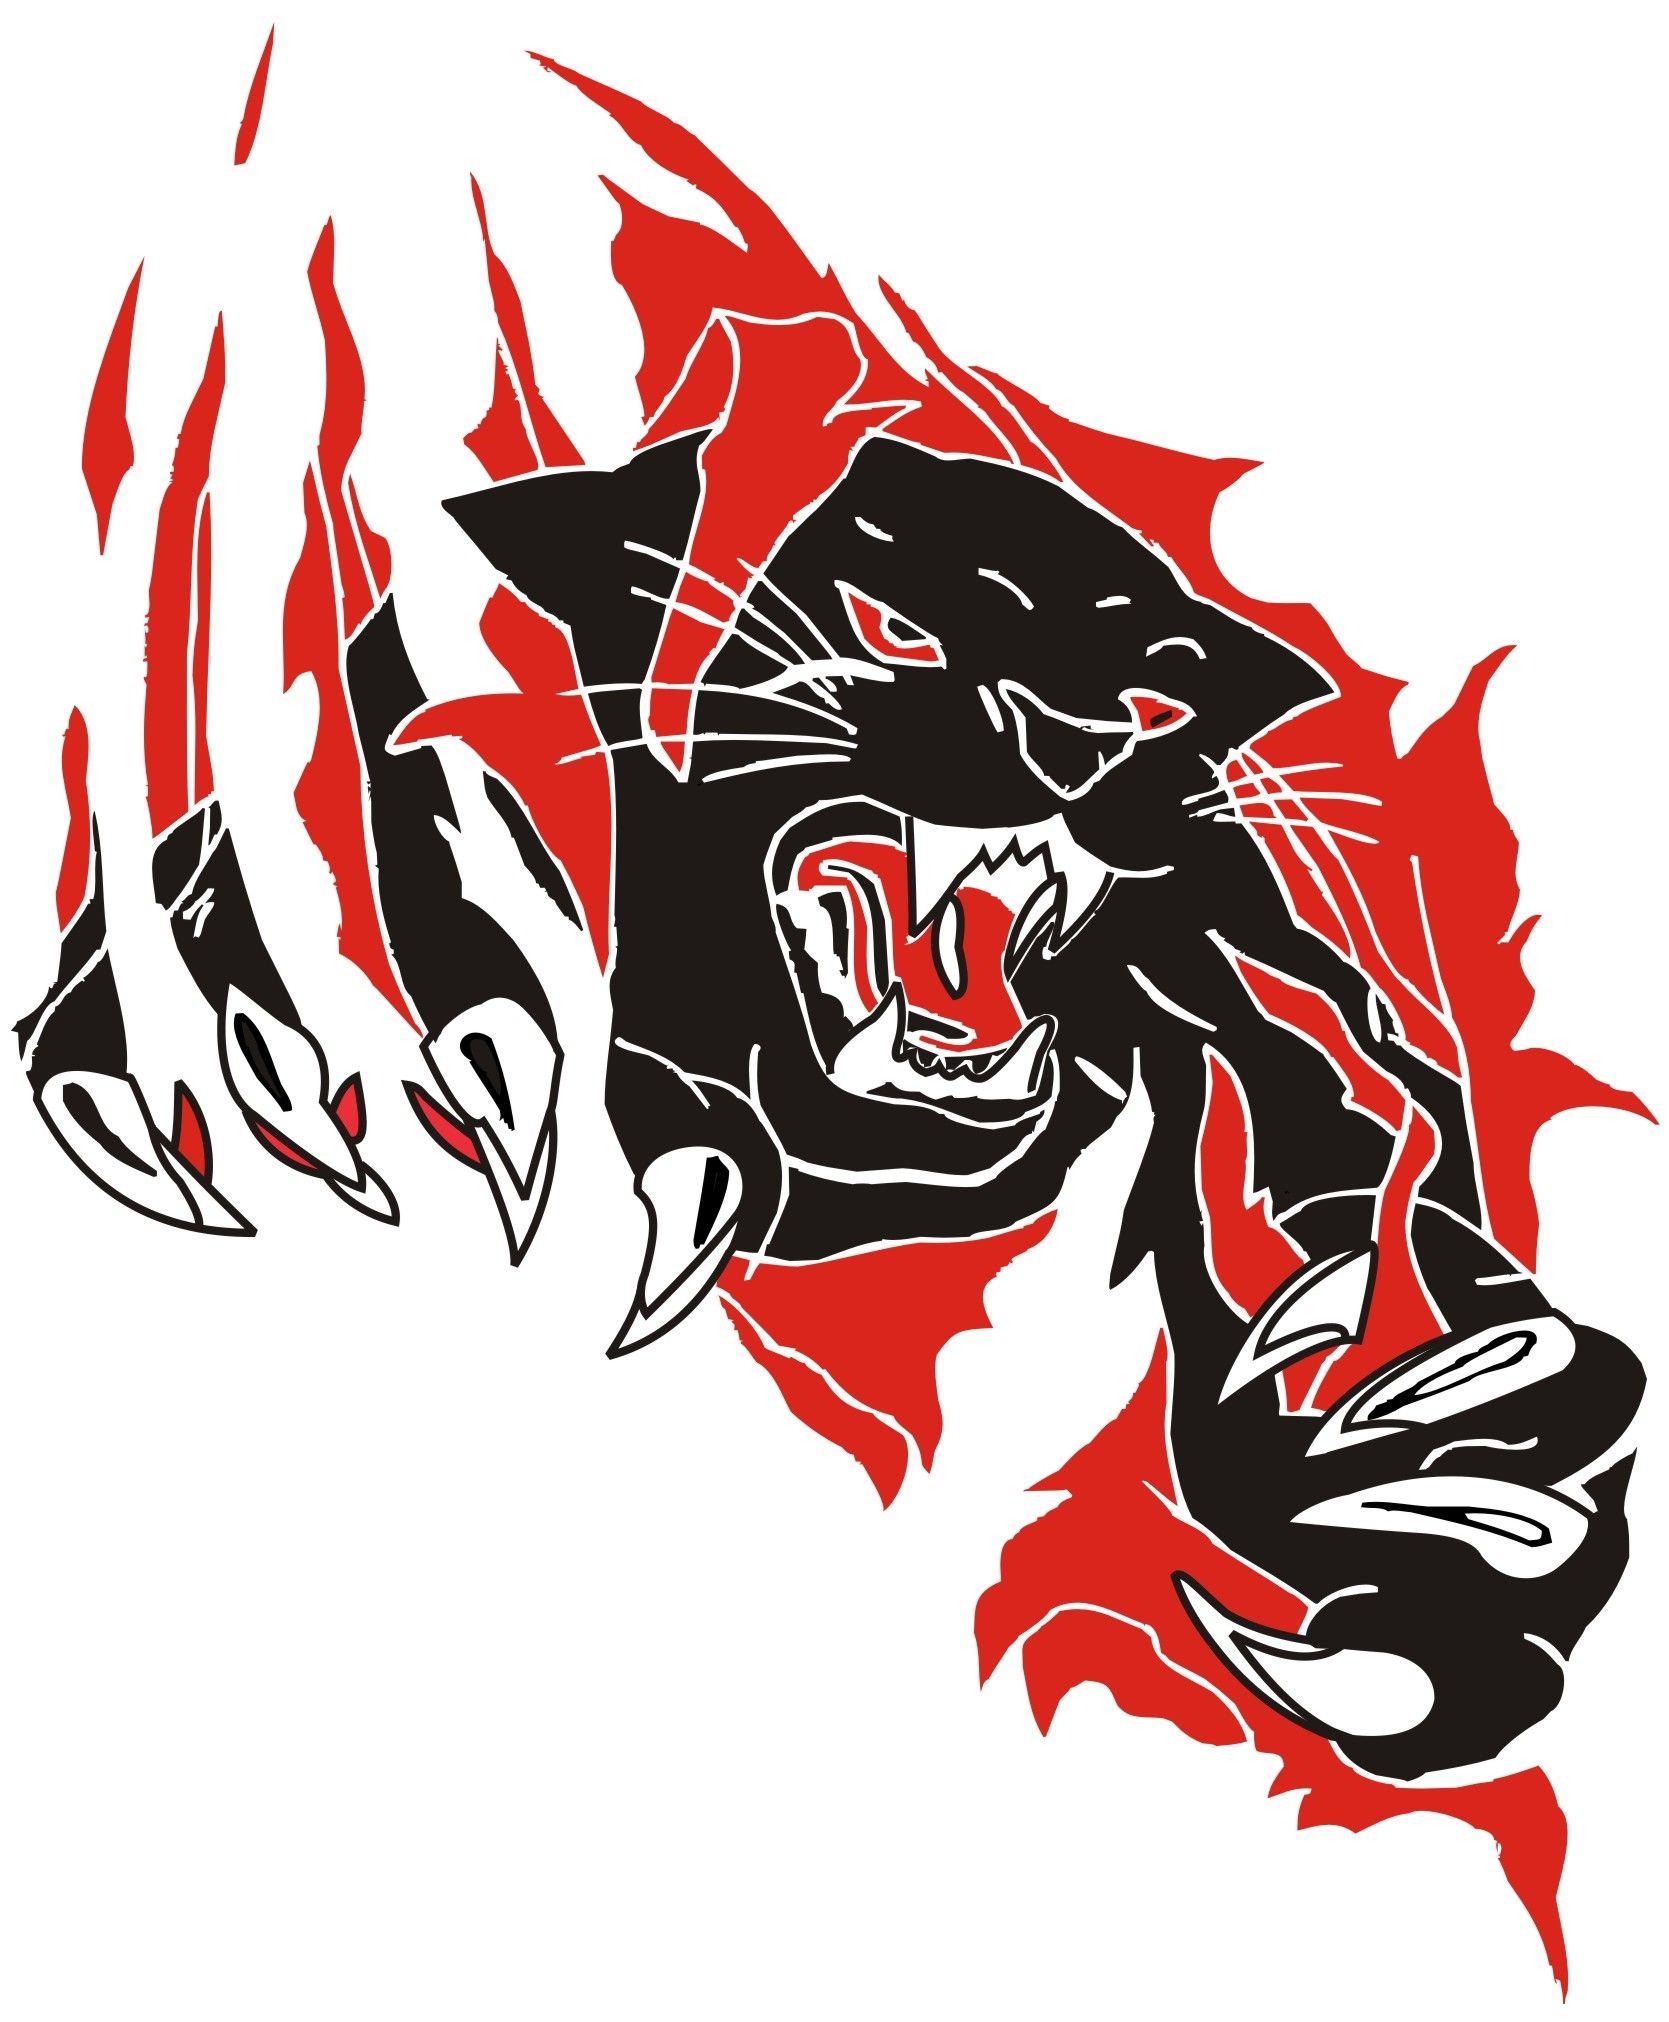 Red and Black Football Logo - Black Panthers Football Logo